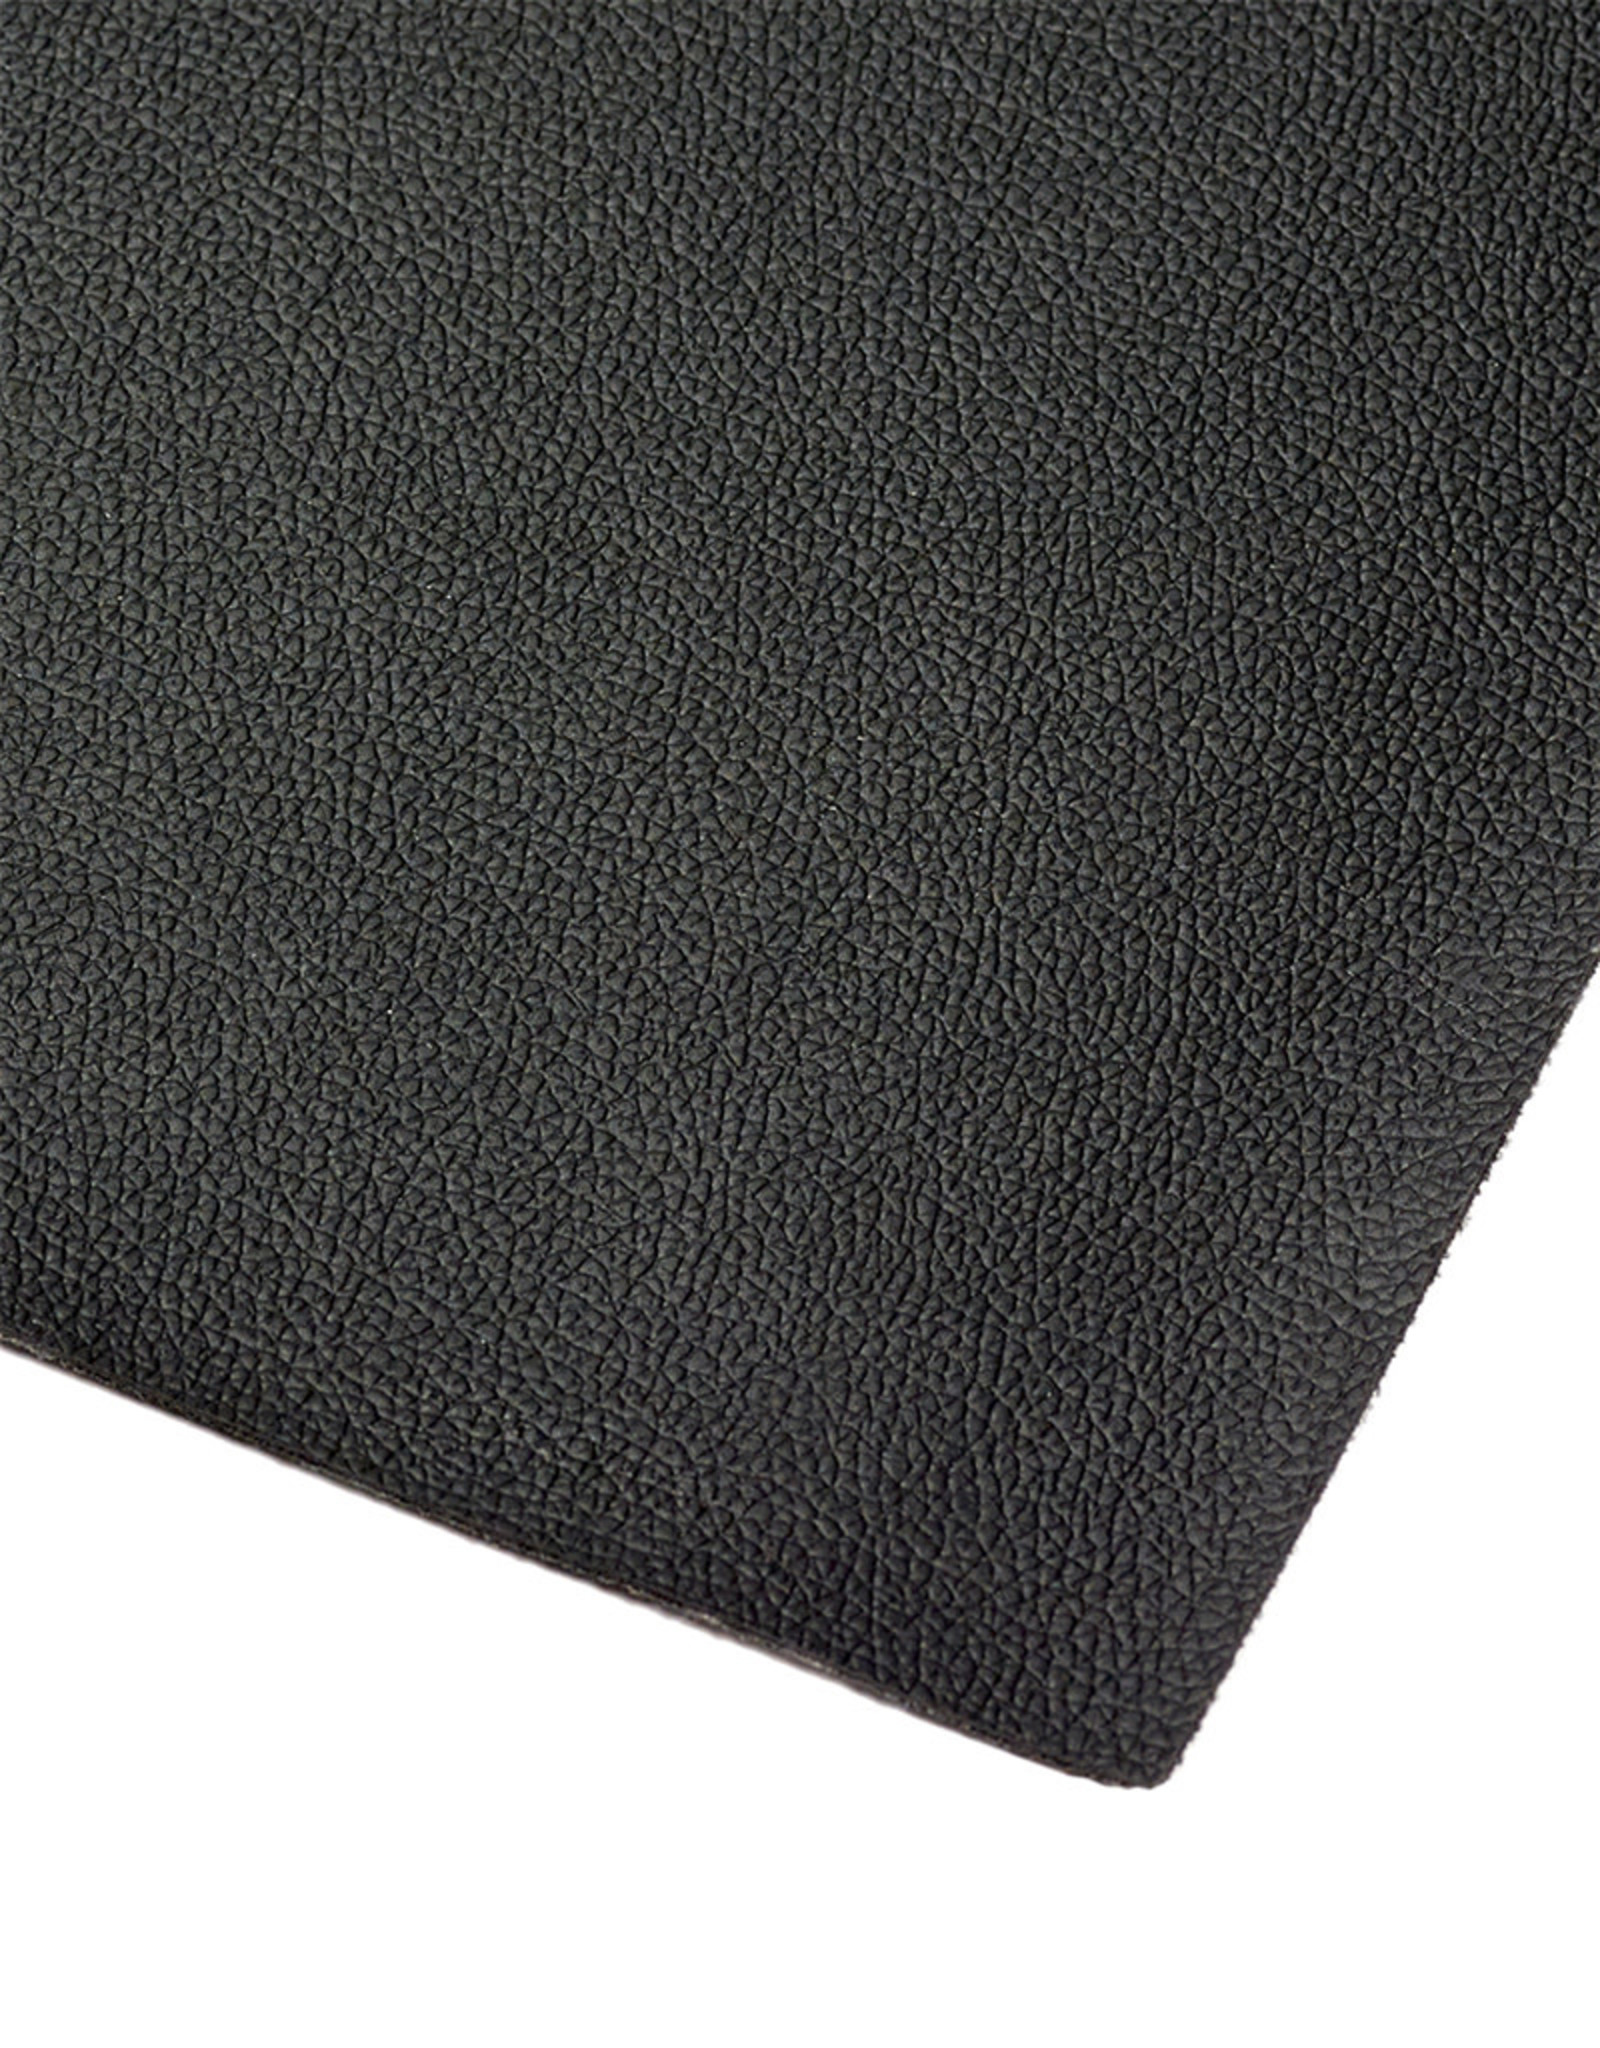 Serax Leather Pad for Wall Desk Black - Showmodel